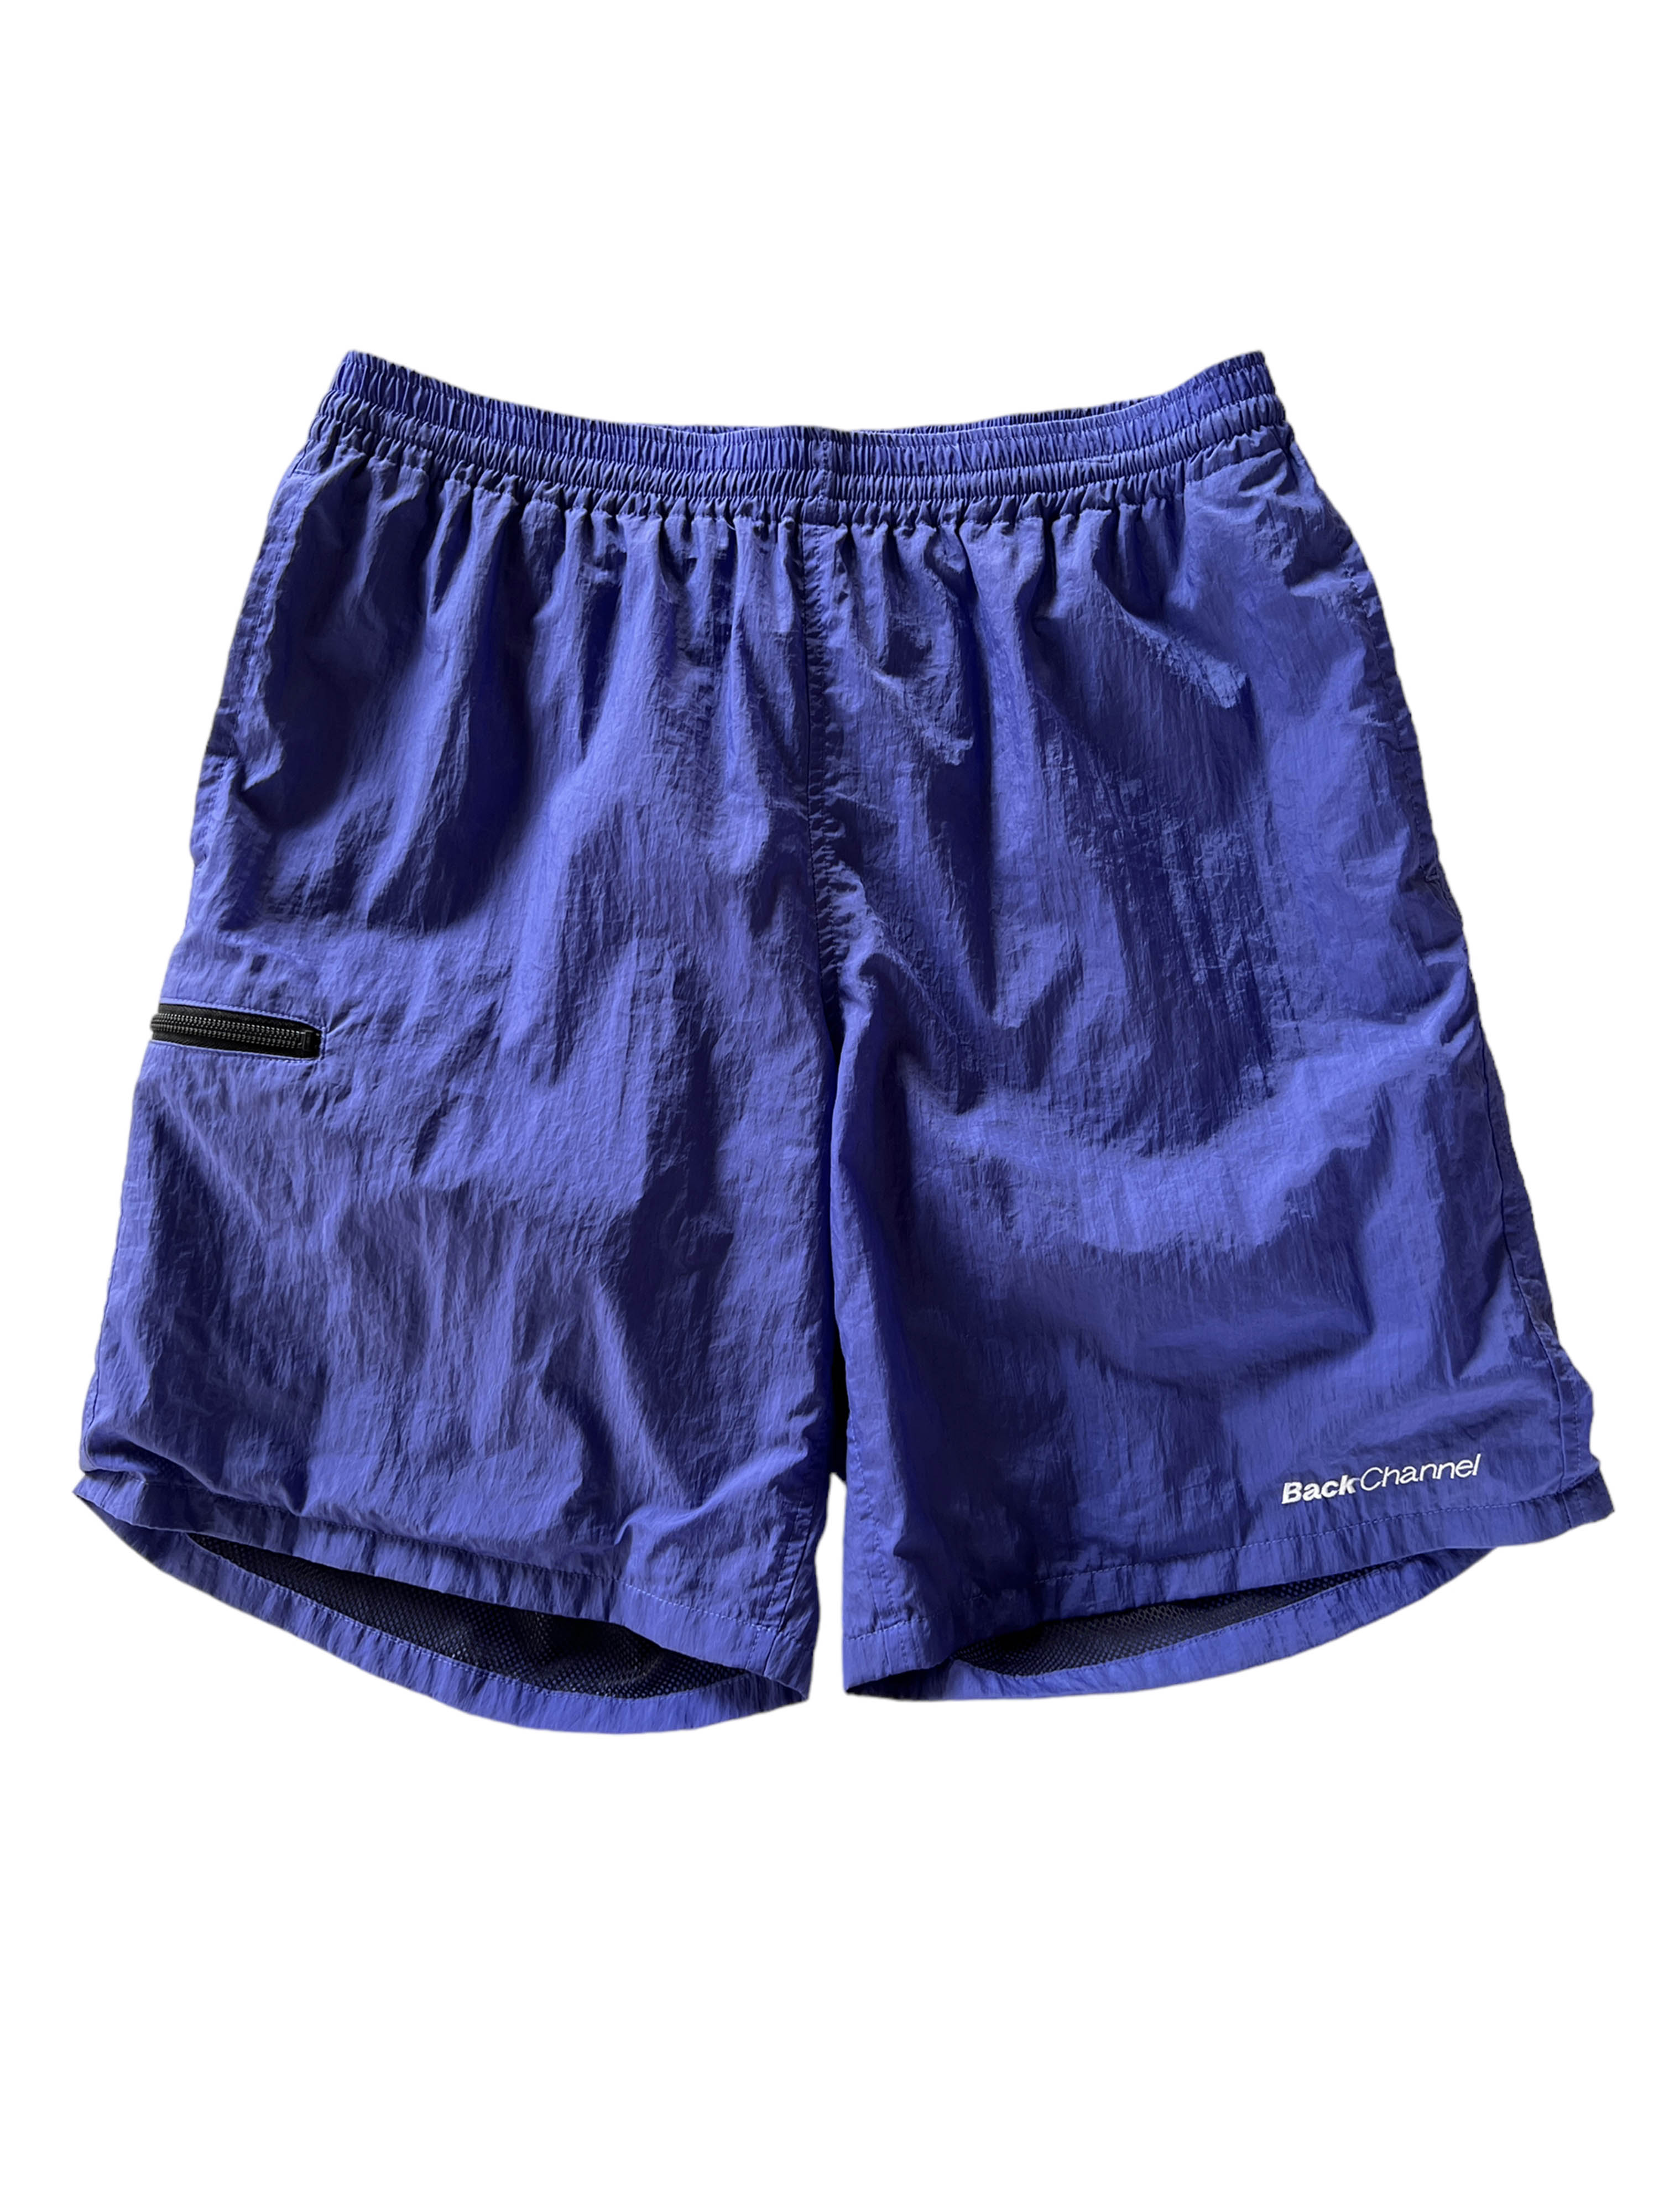 Back channel nylon shorts